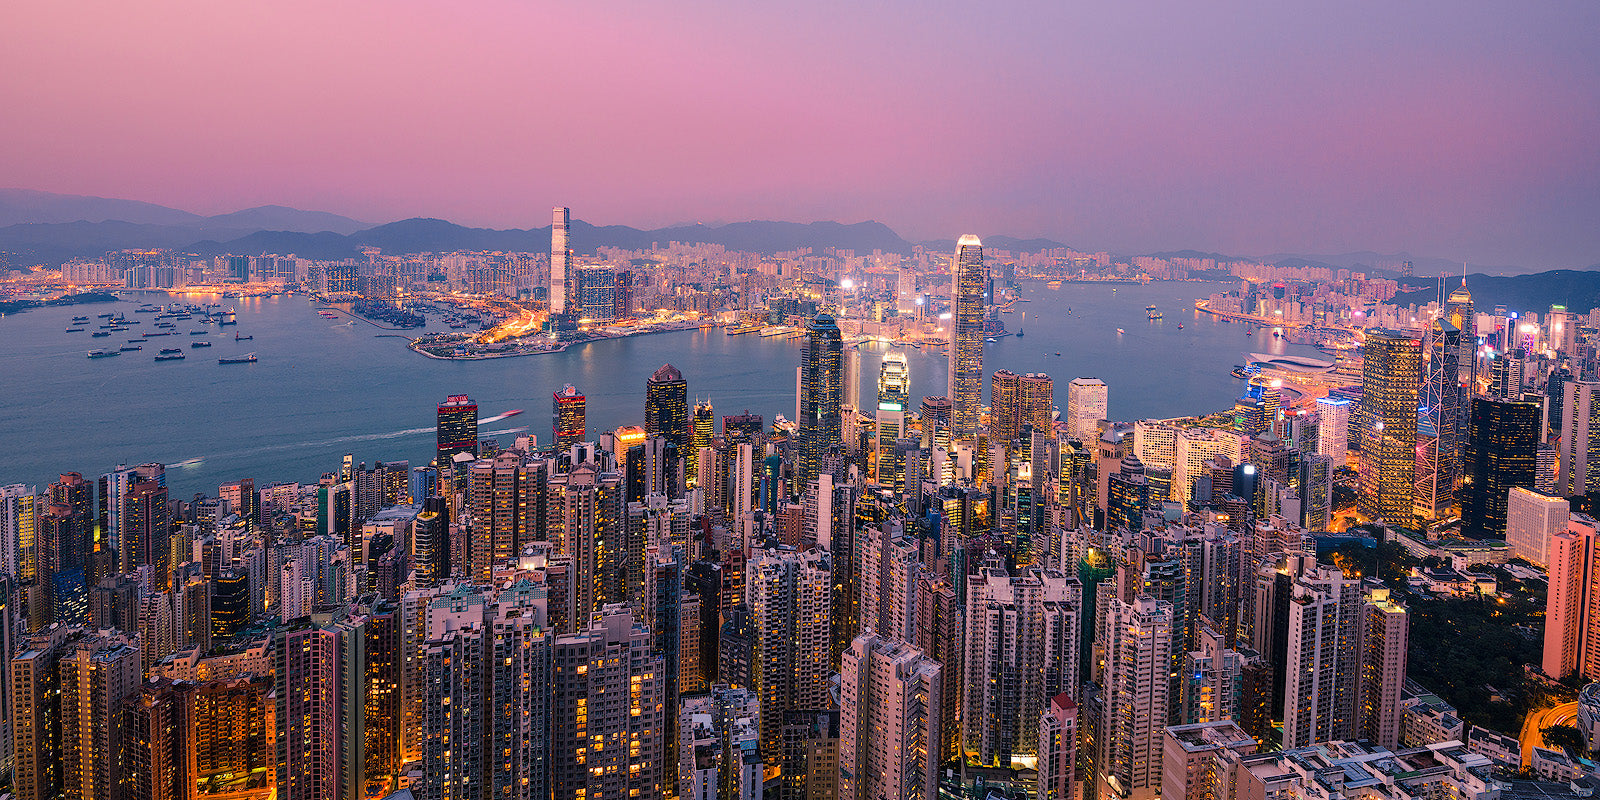 Hong Kong's political Landscape